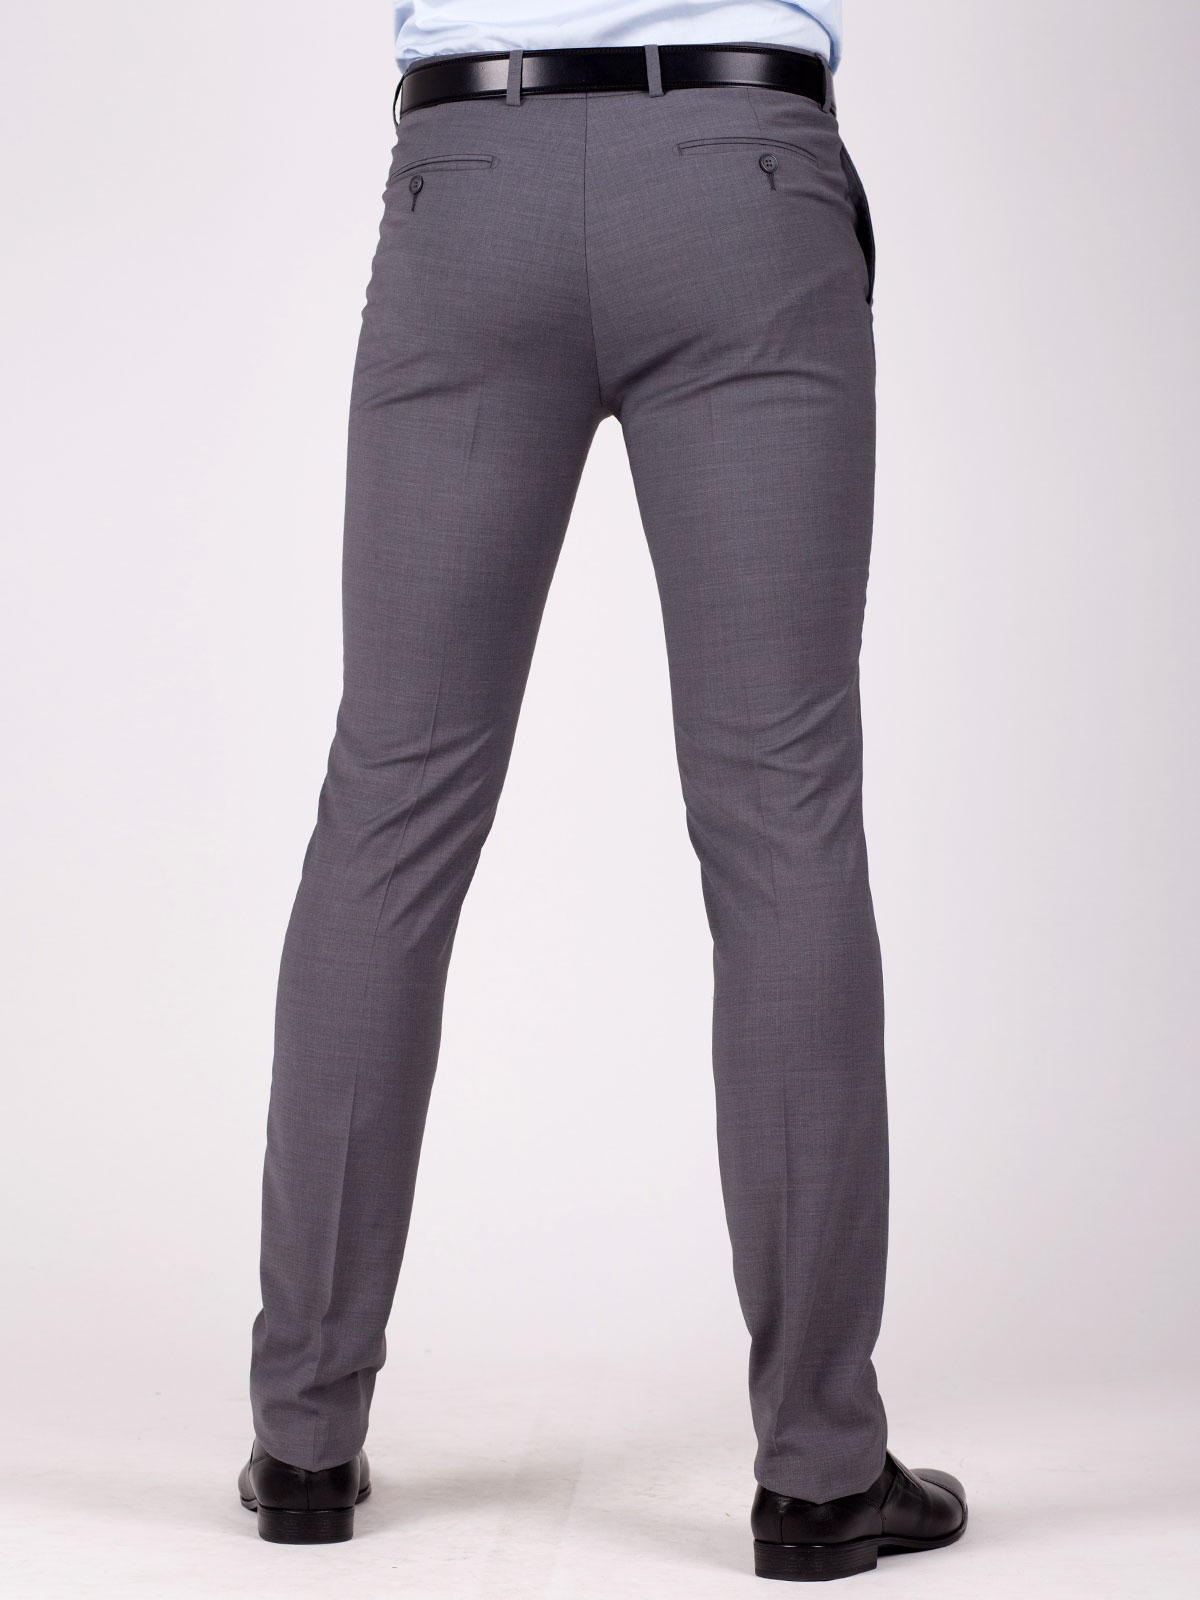 Elegant gray pants - 63206 € 30.93 img2